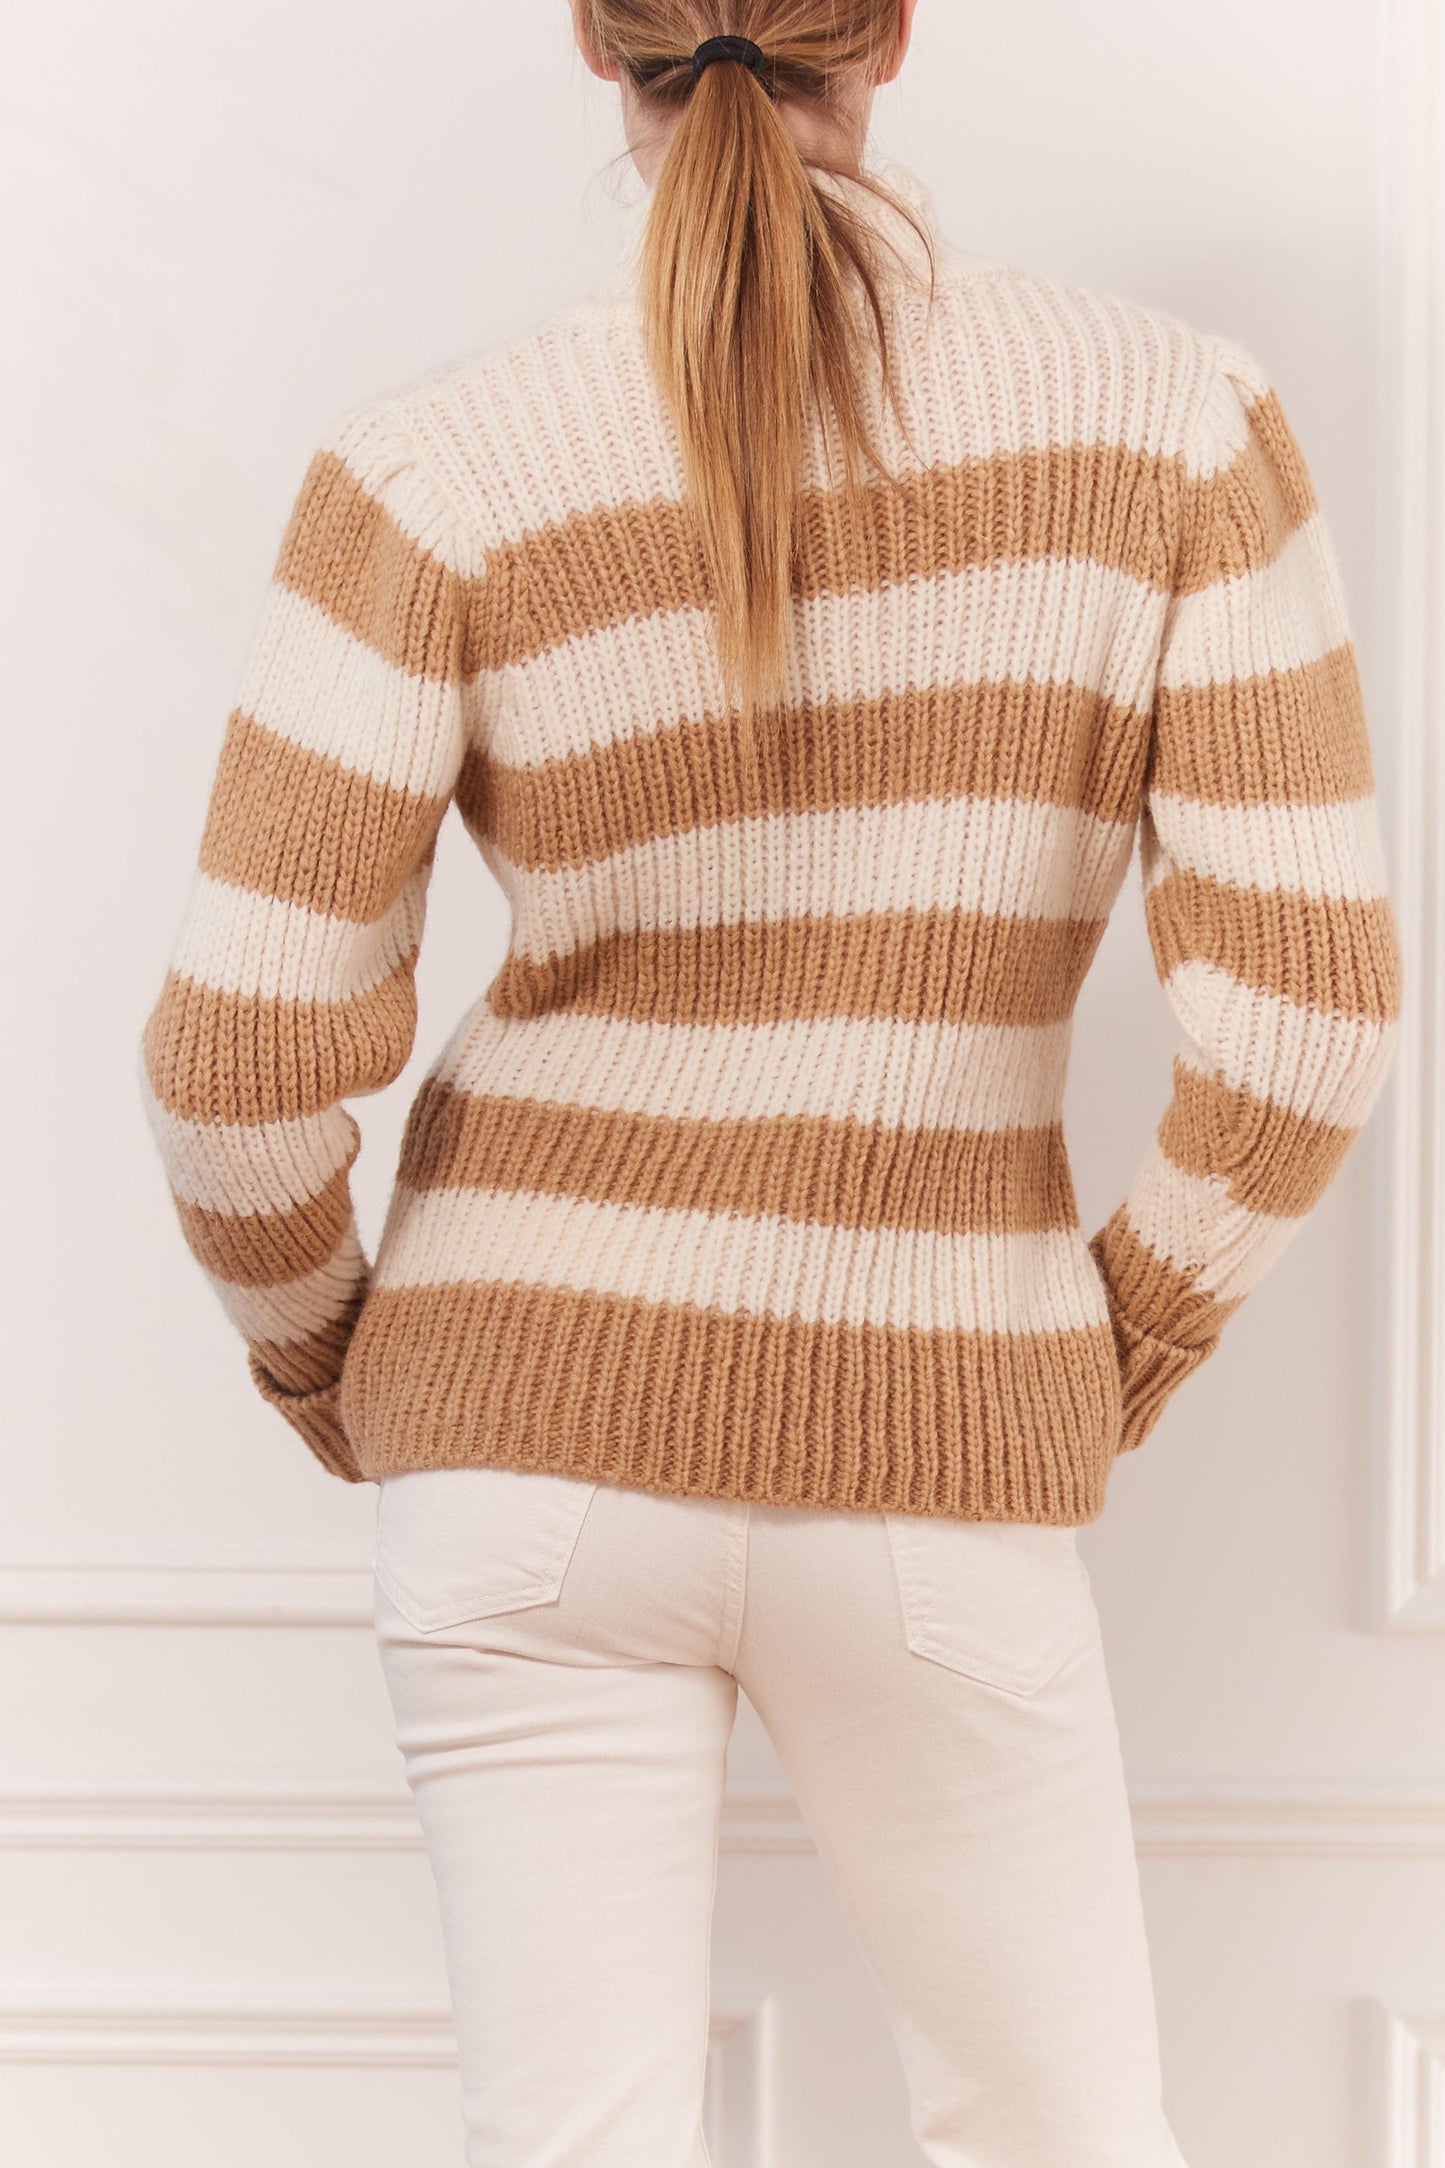 Striped turtleneck sweater